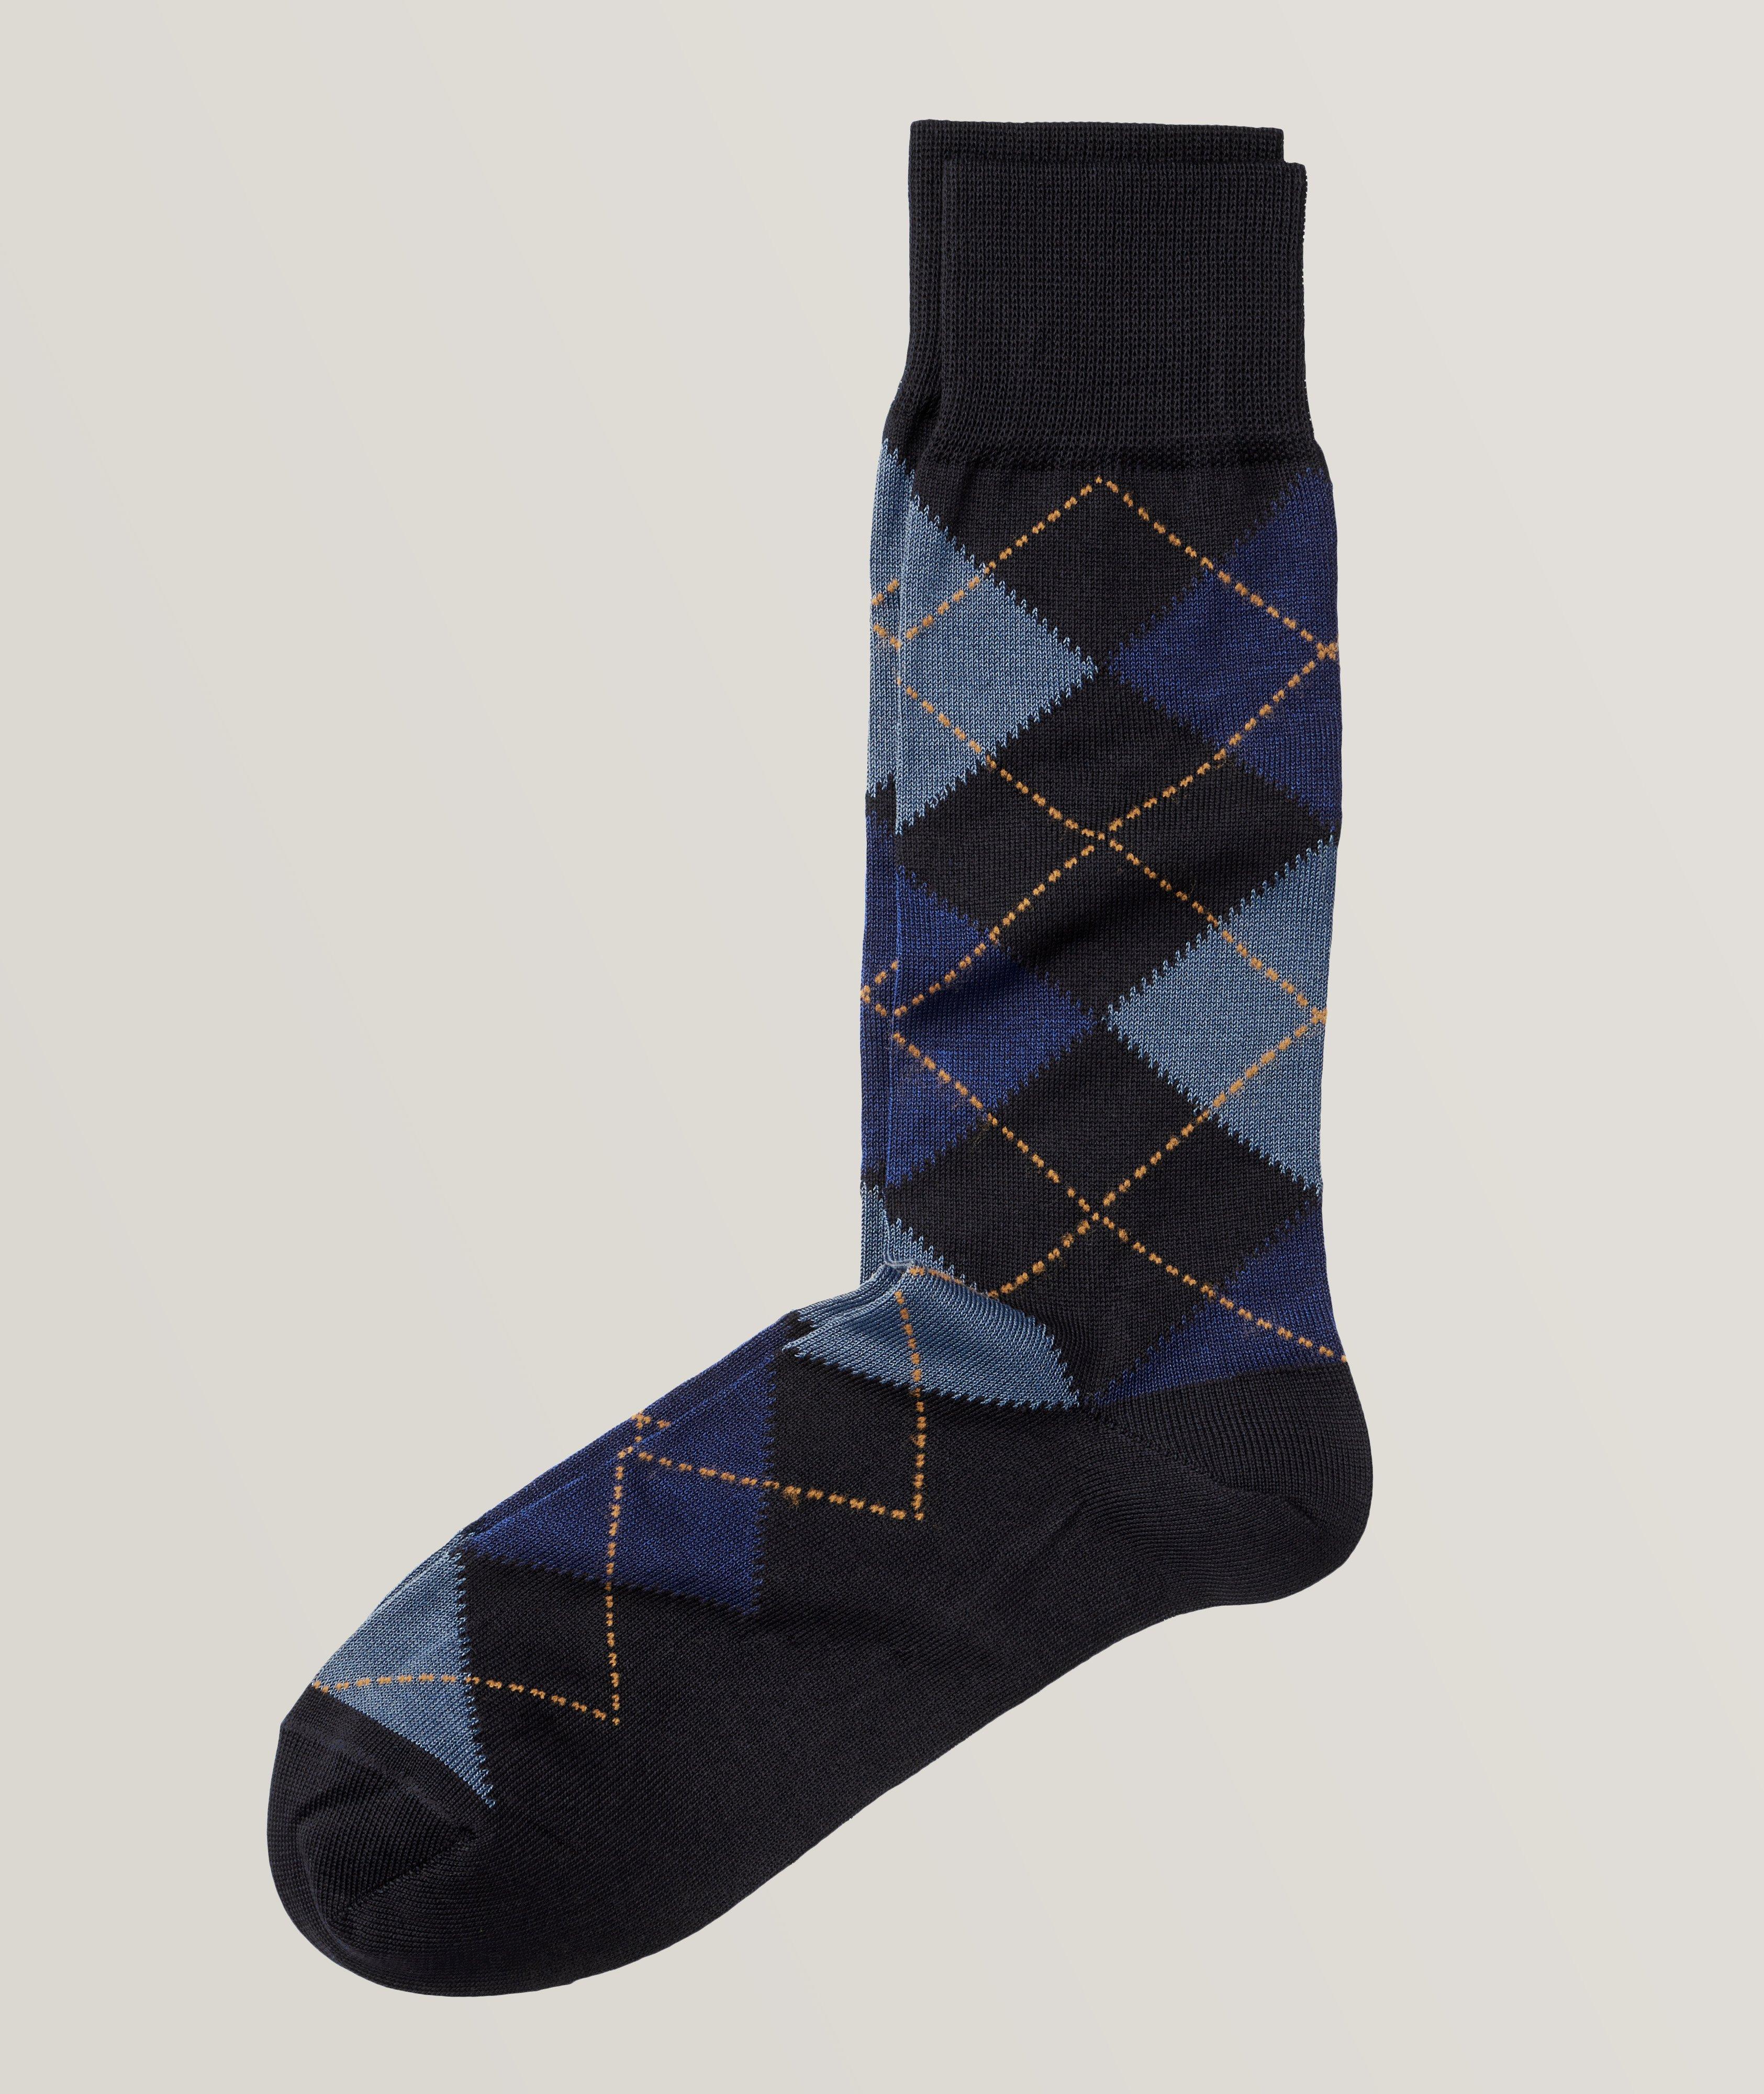 Geometric Pattern Cotton-Blend Socks image 0